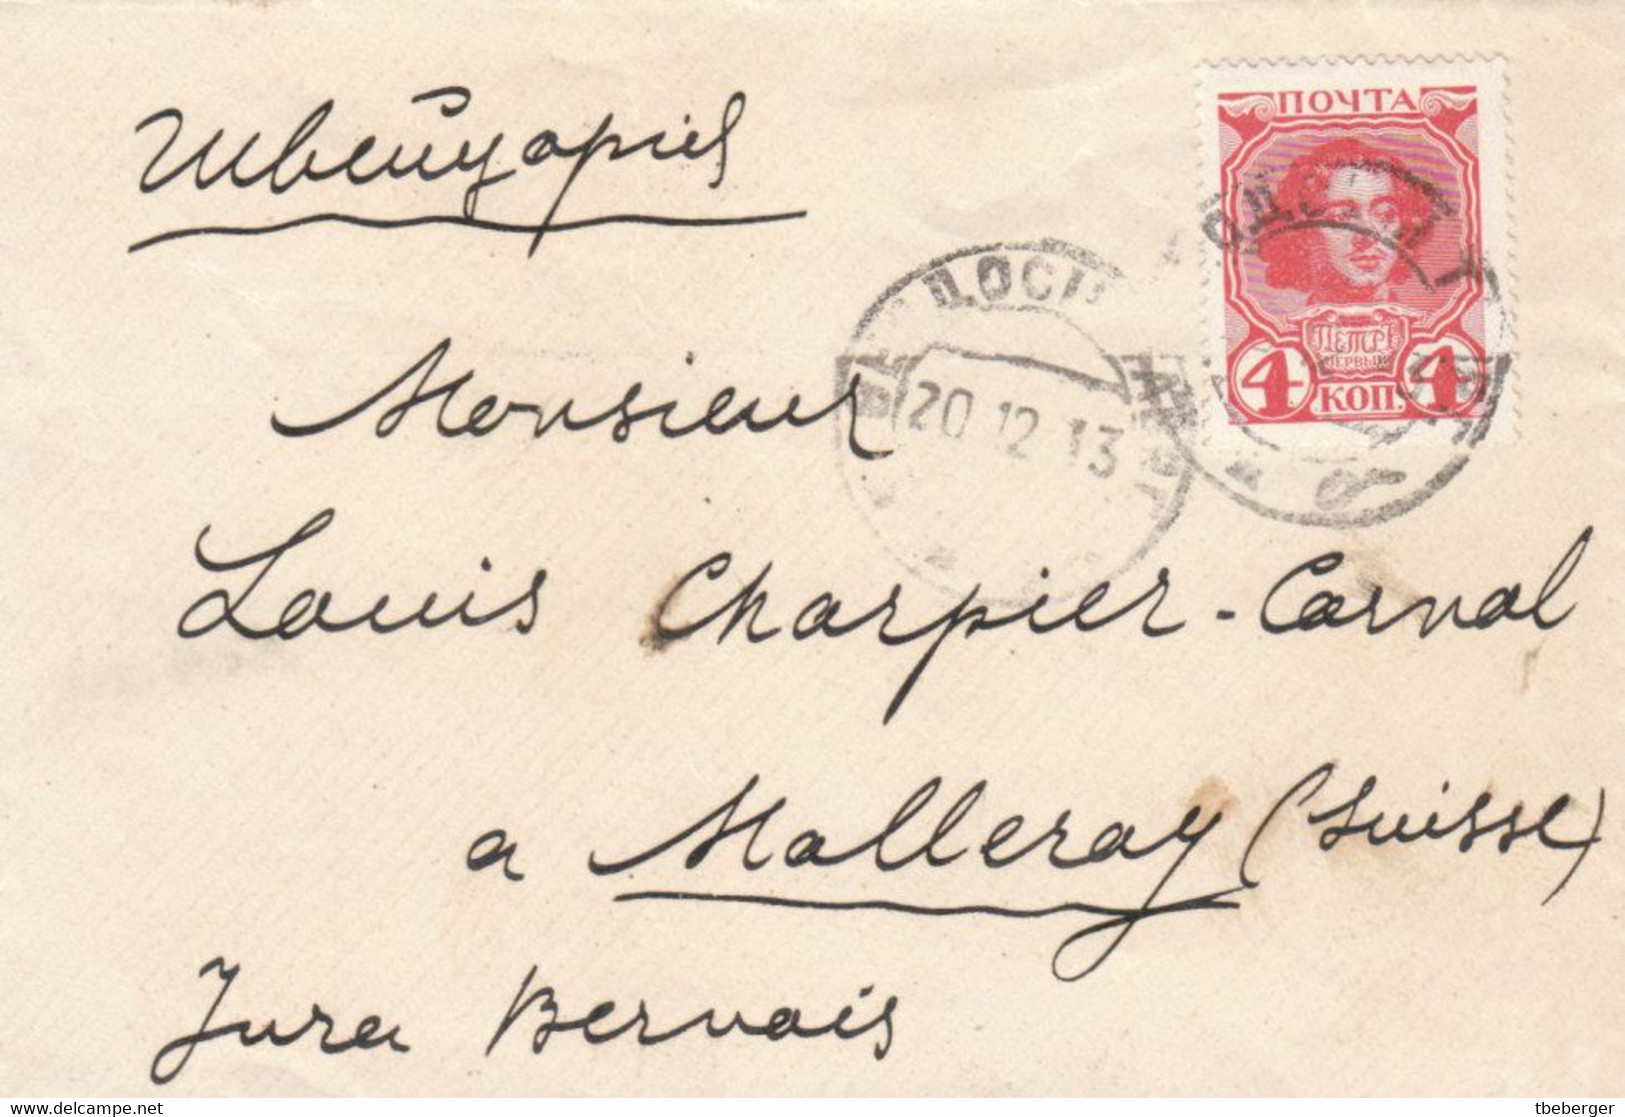 Russia Ukraine Crimea 1913 Envelope FEODOSIYA TAURIDIA To MALLERAY Jura Bernois Switzerland (v149) - Covers & Documents